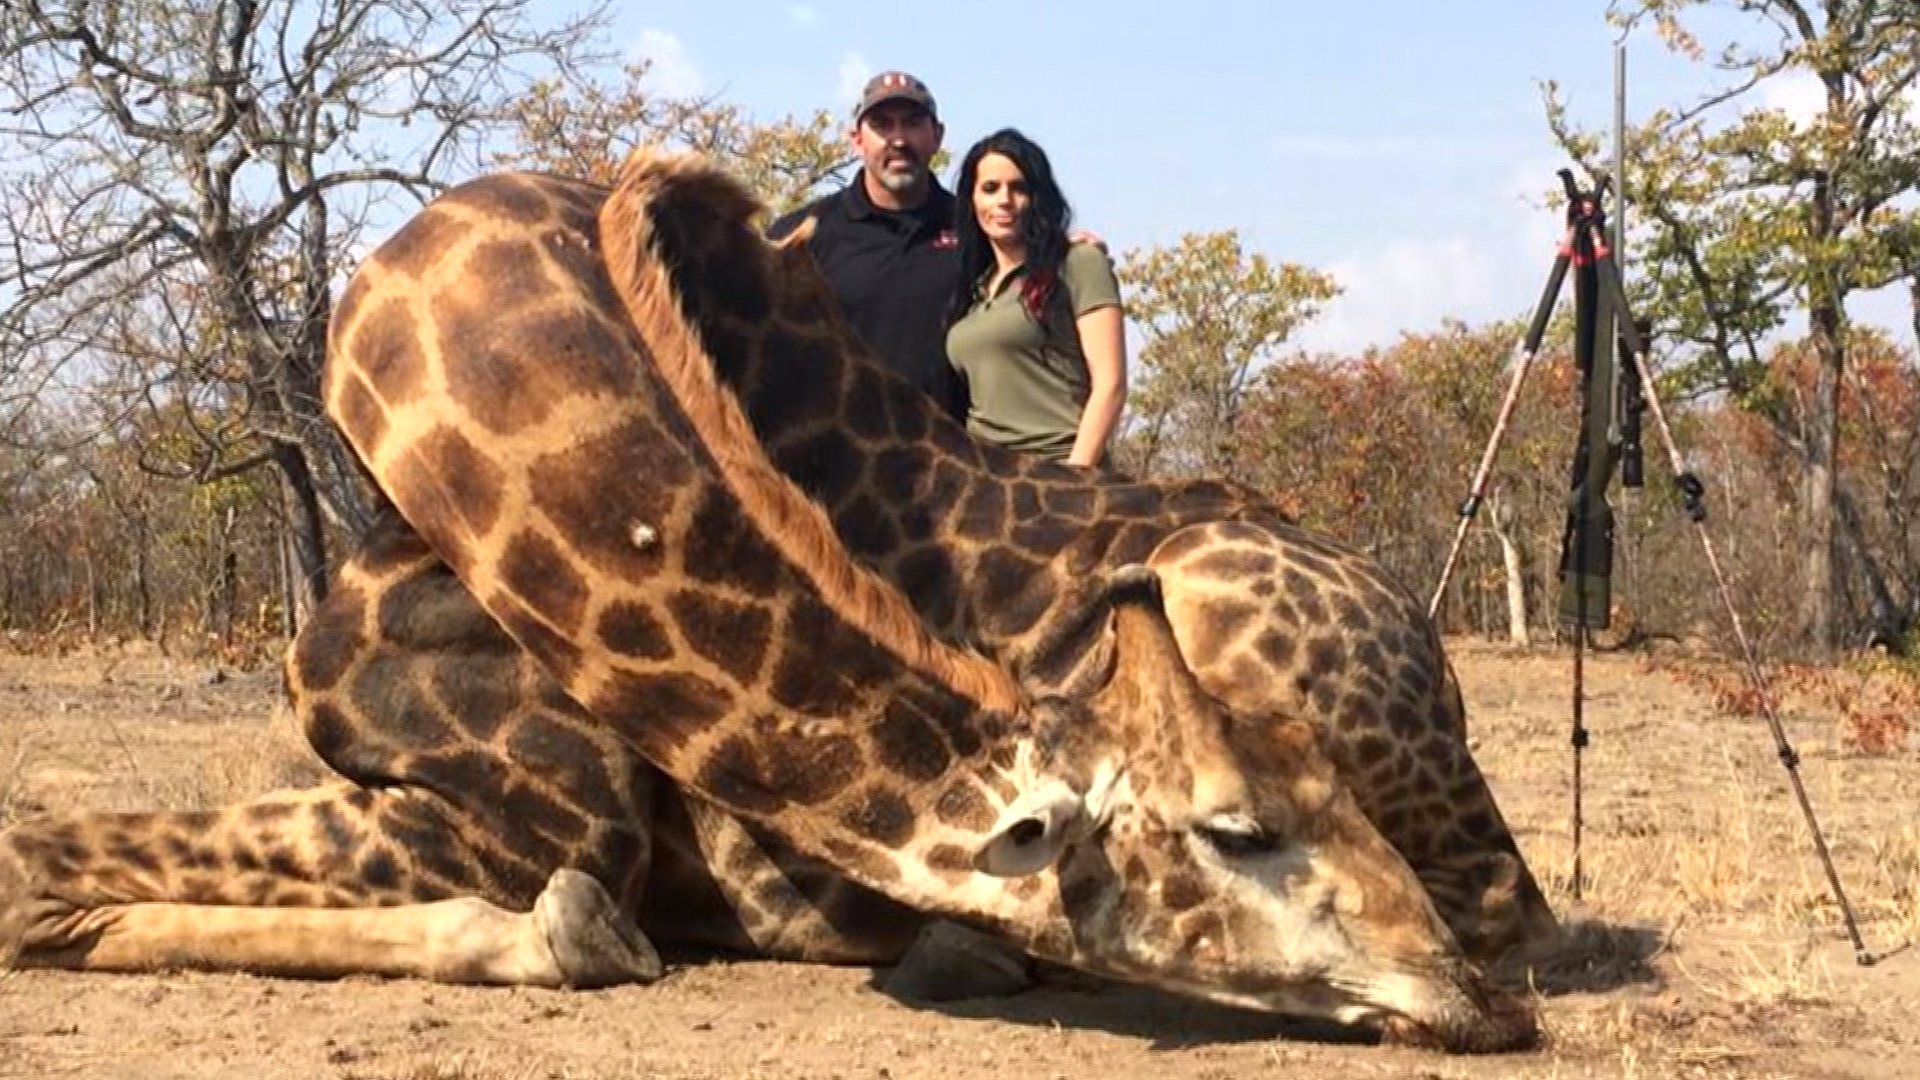 Idaho huntress Sabrina Corgatelli talks about dead giraffe photos.